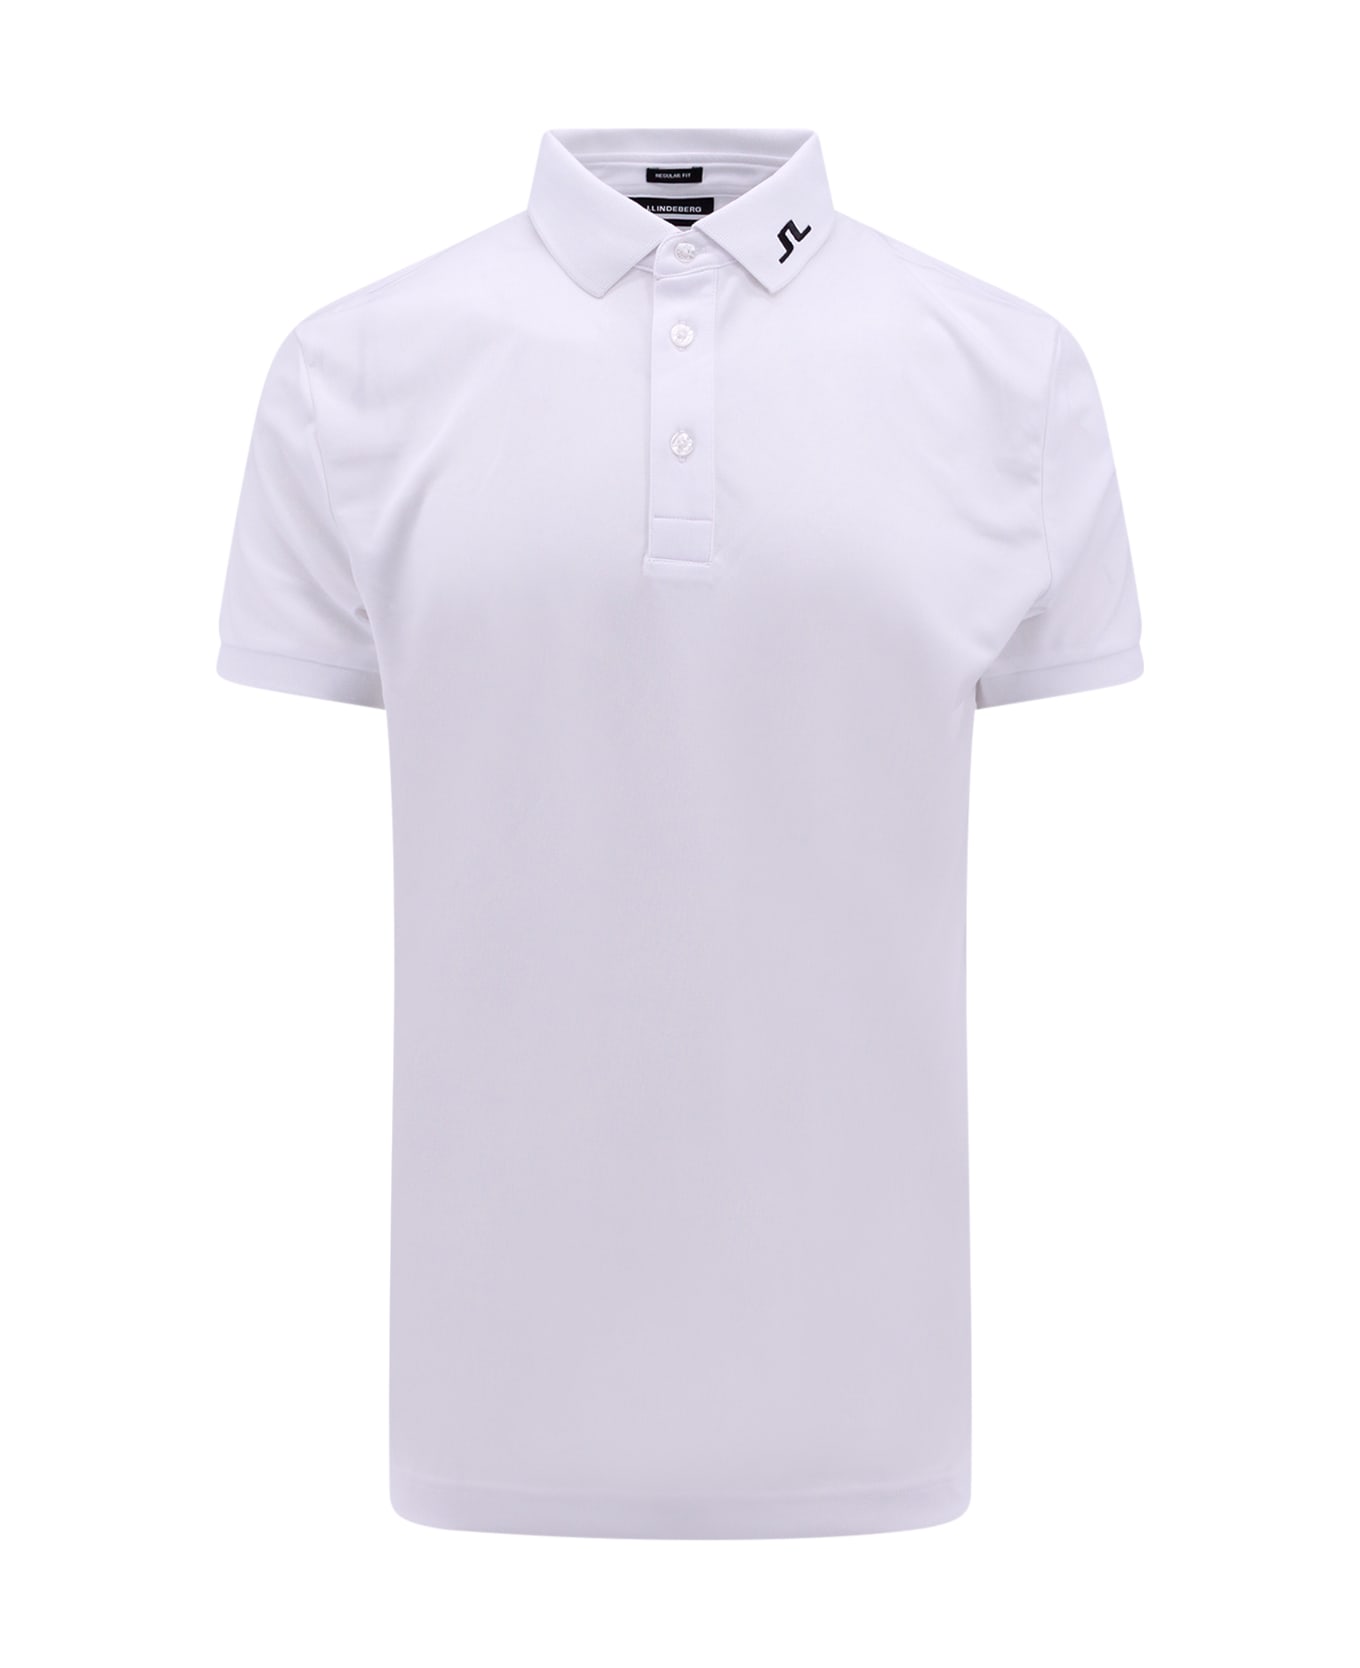 J.Lindeberg Kv Polo Shirt - White